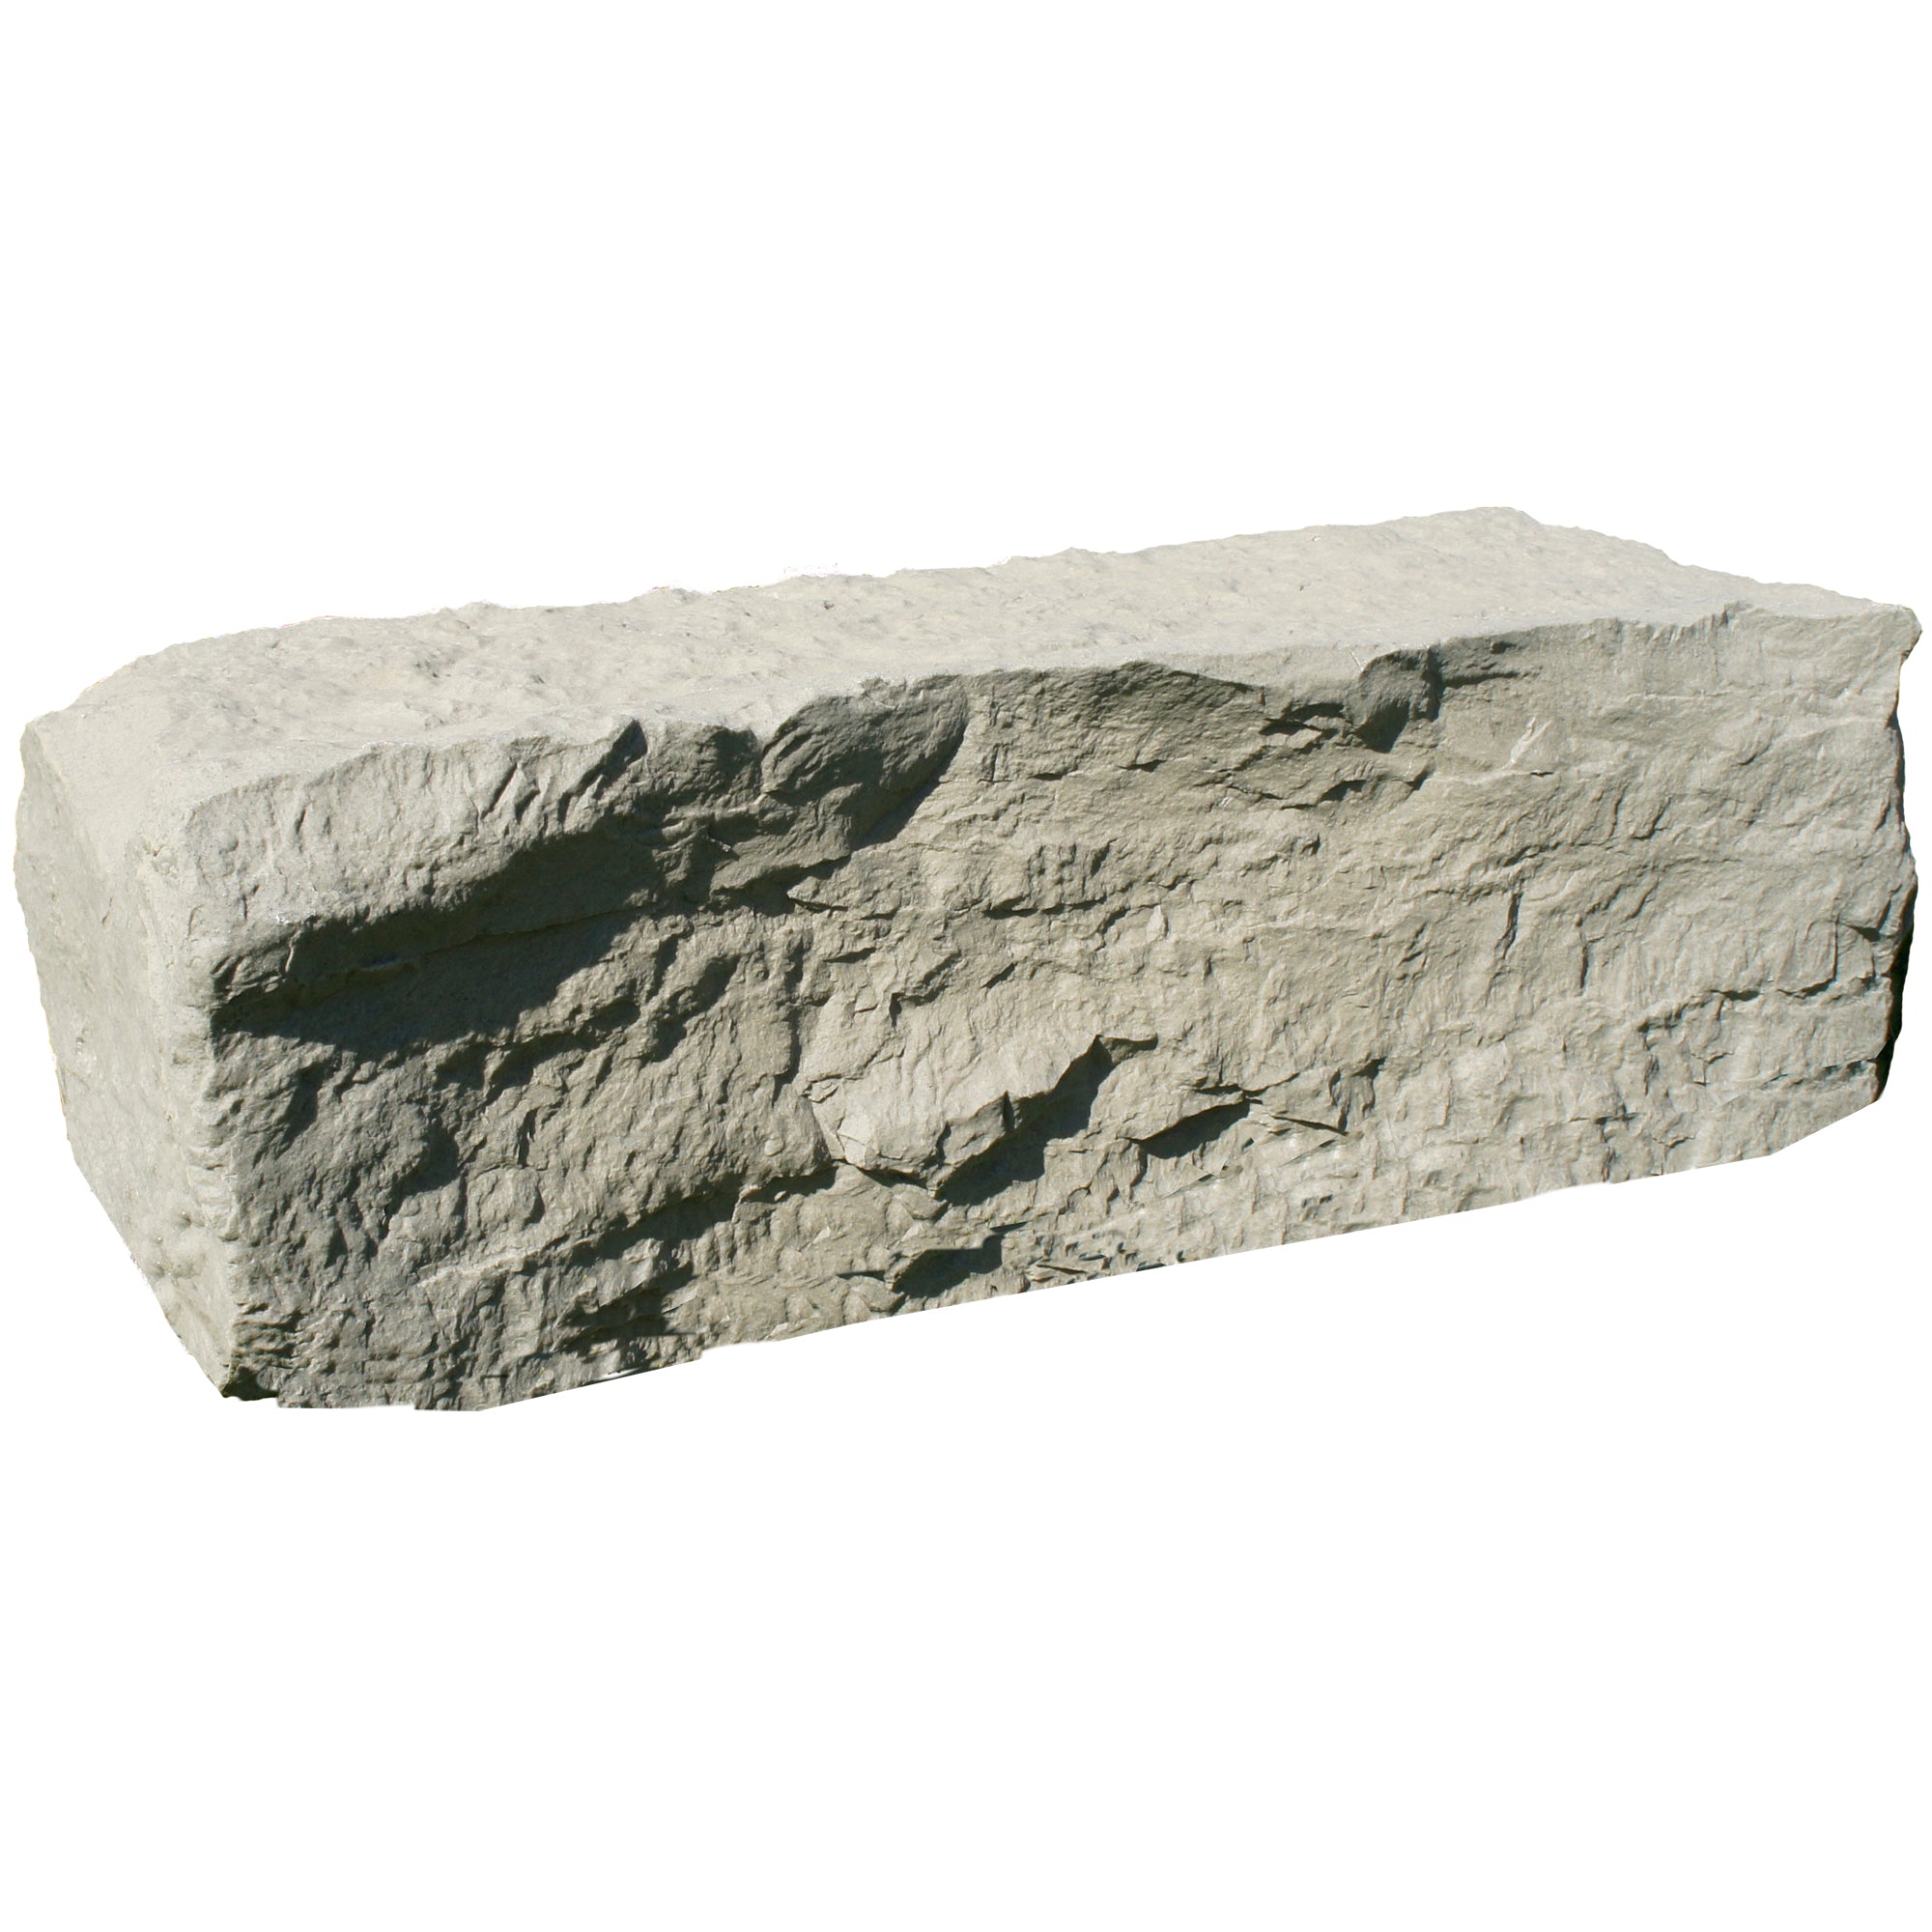 EuroStone® 4x4 Pavers - Parklea Sand and Soil